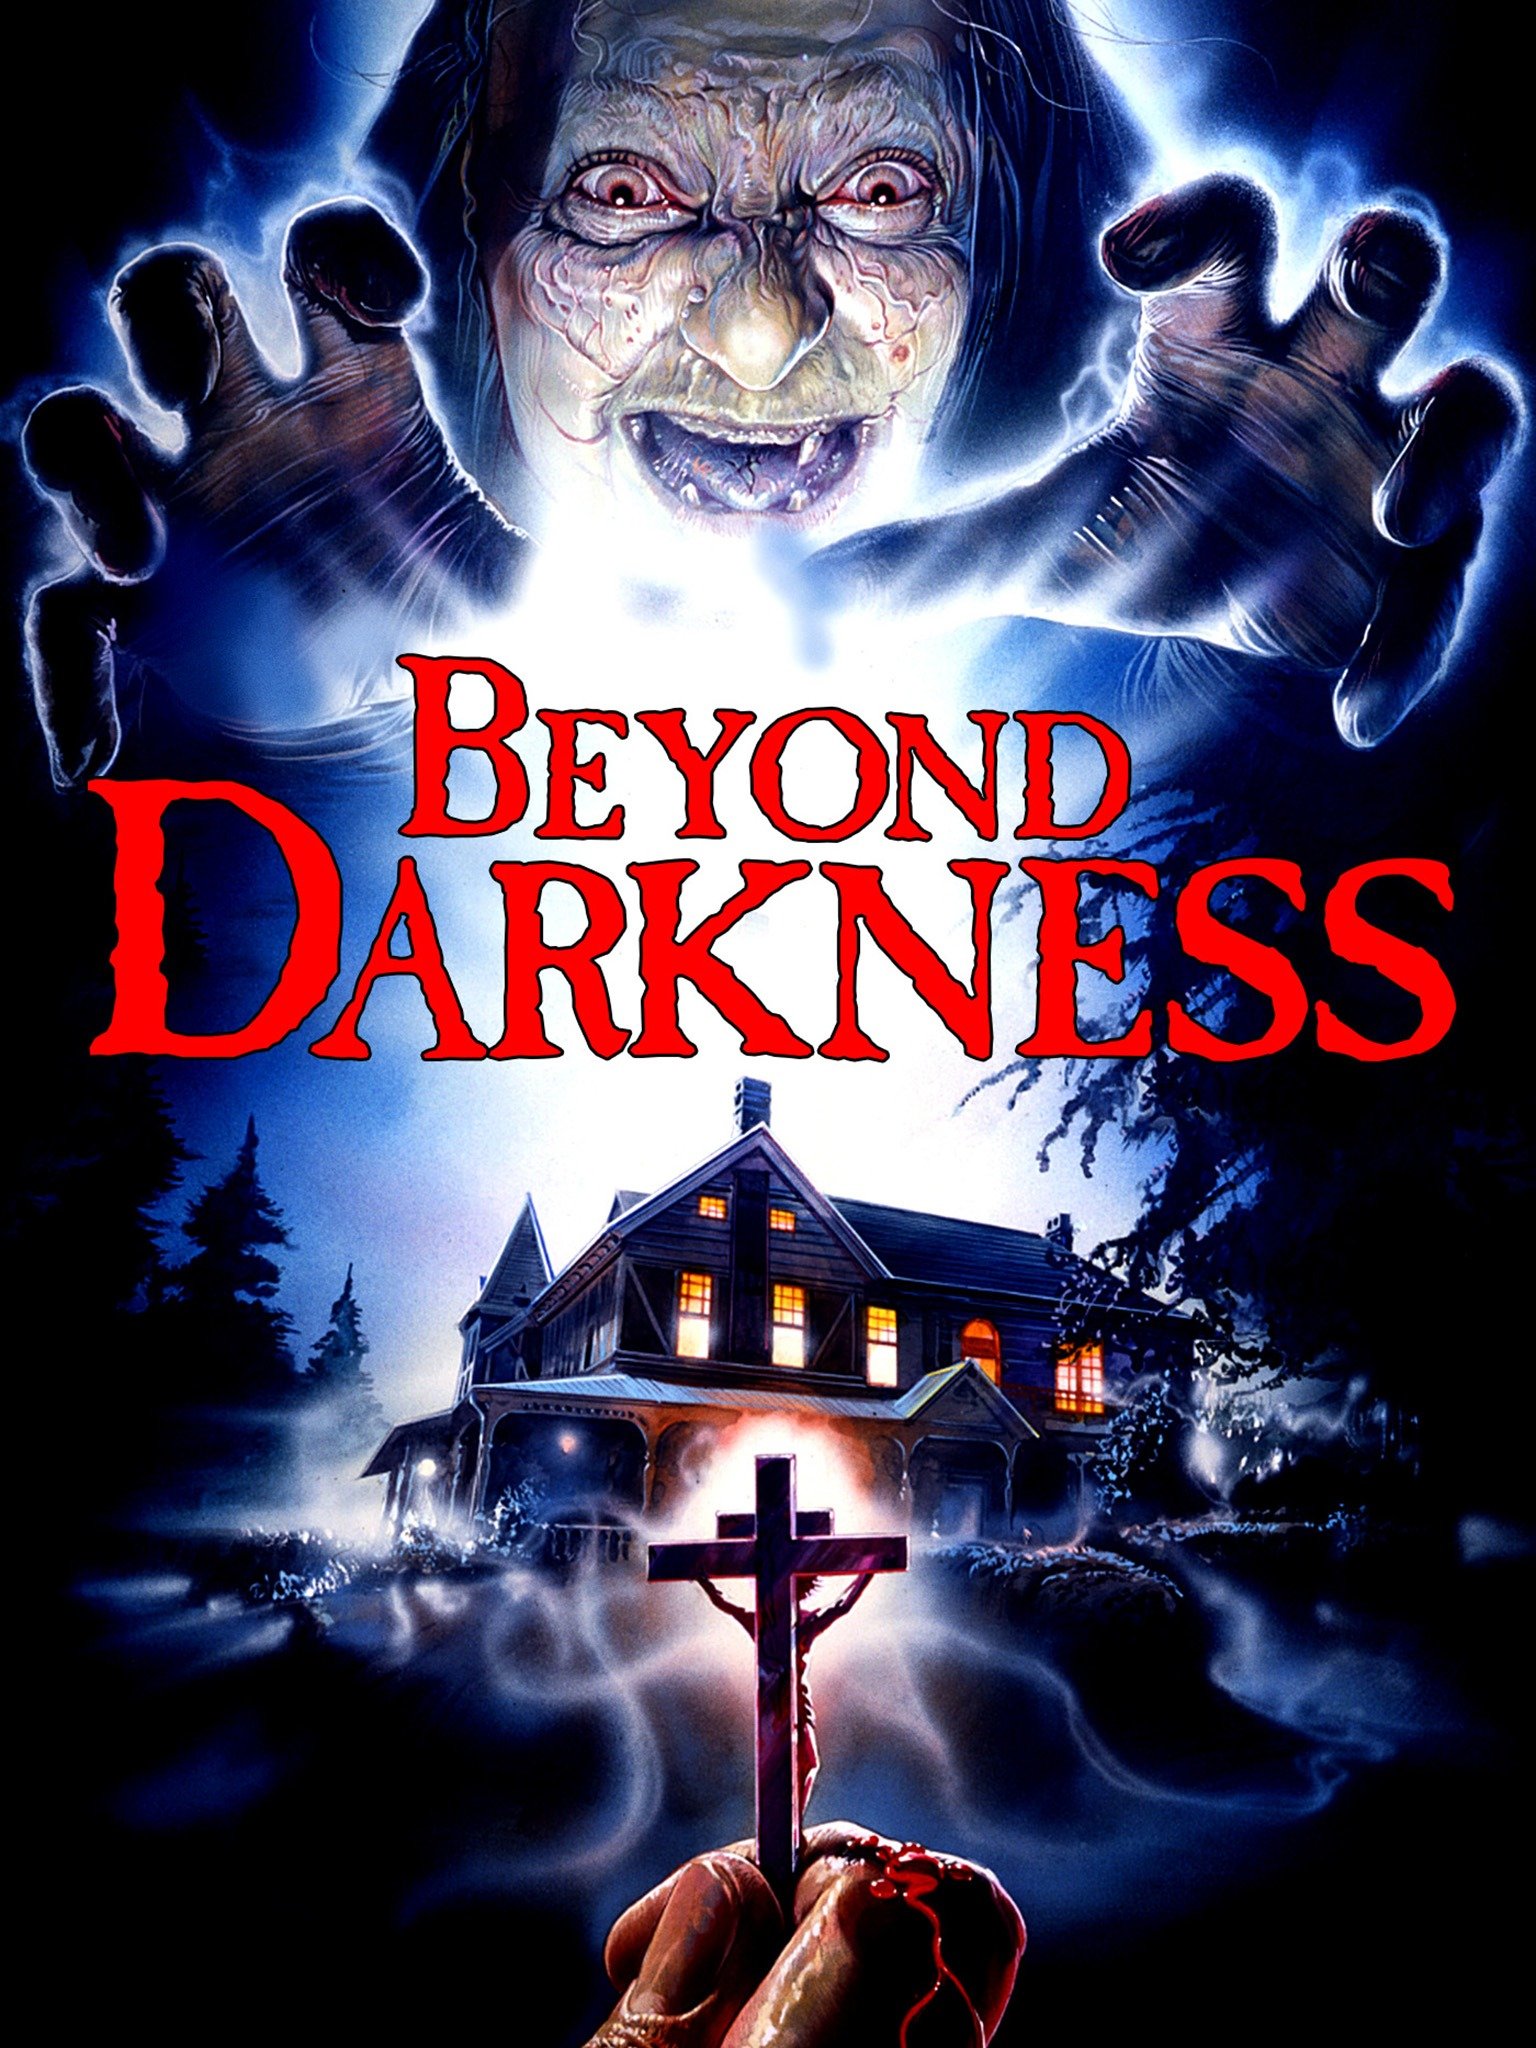 Beyond Darkness (1990)